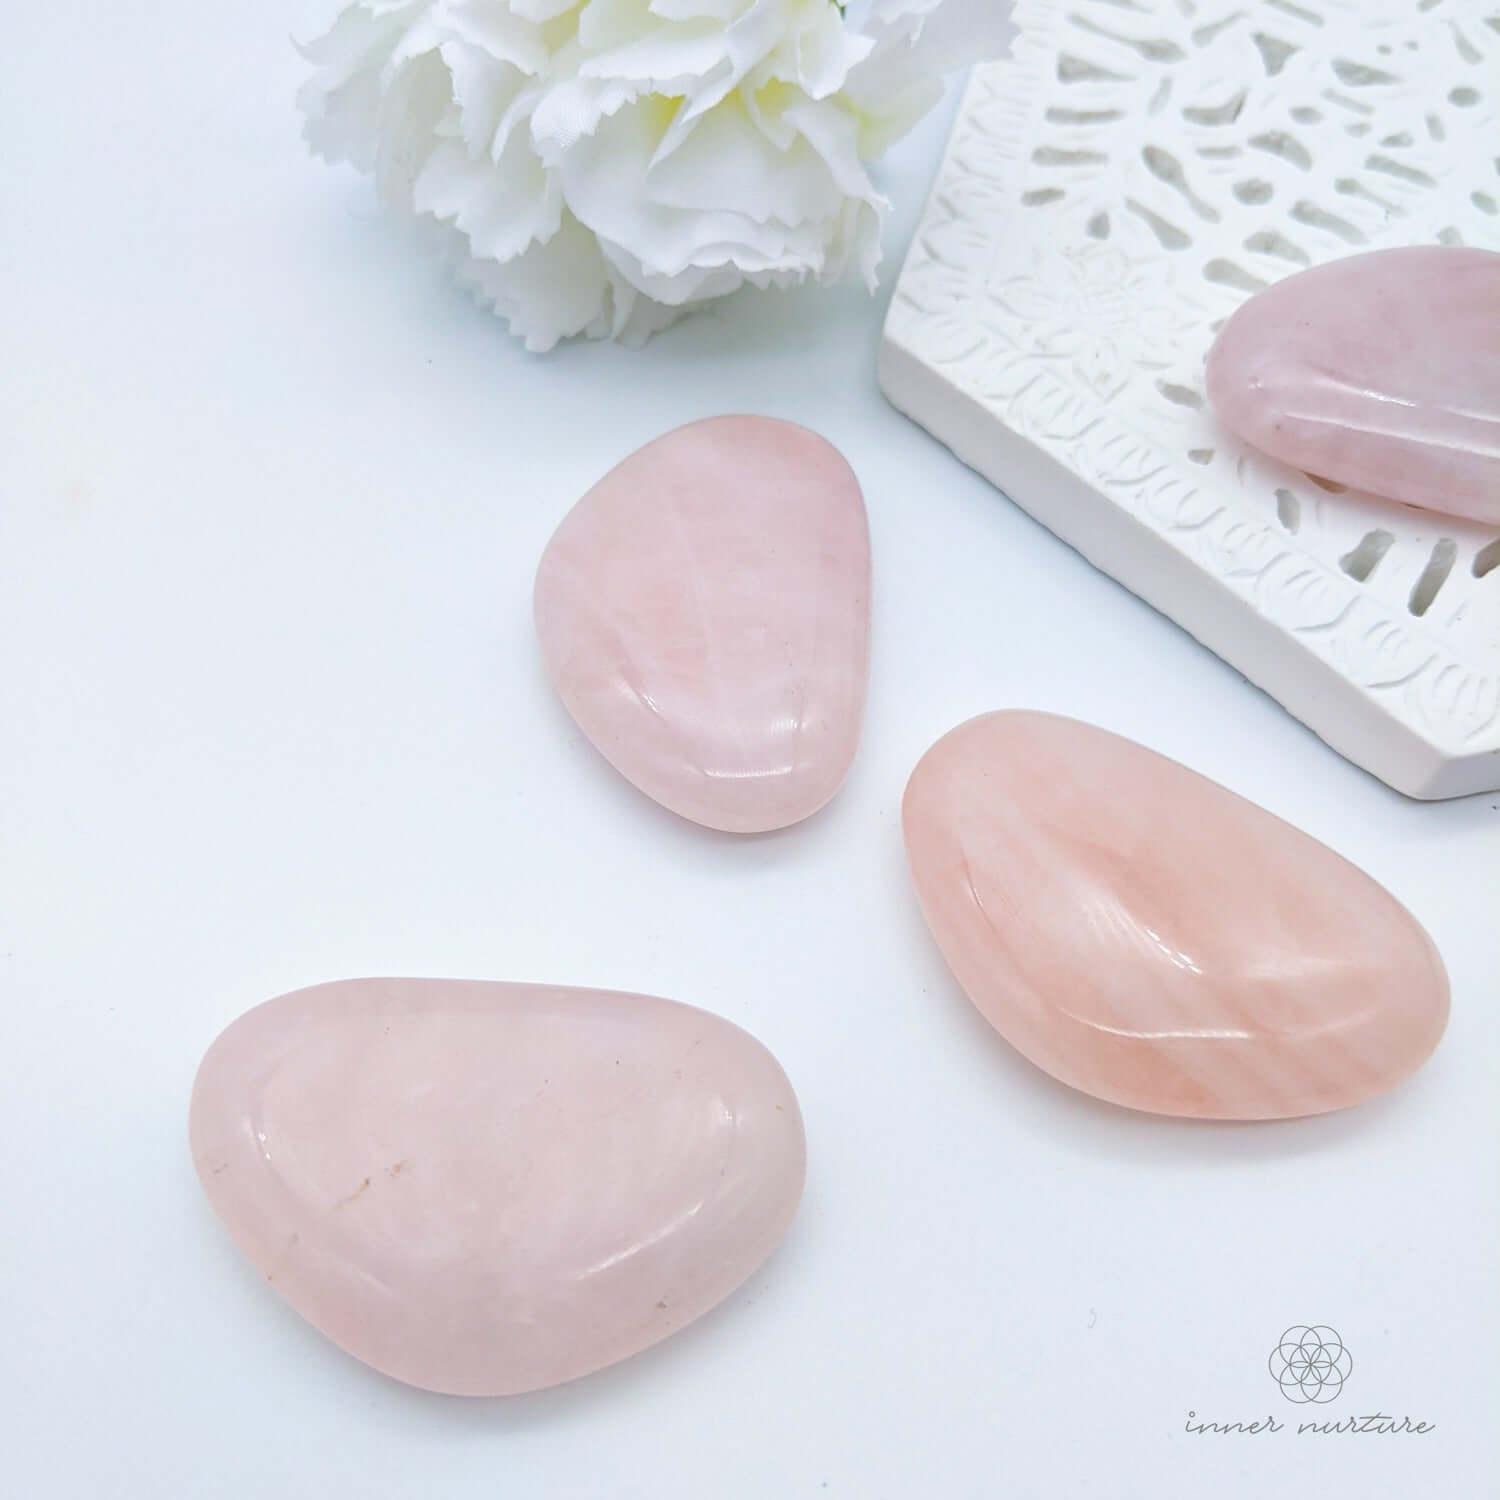 Rose Quartz Palm Stone - Online Crystal Shop Australia | Inner Nurture - Ethically Sourced